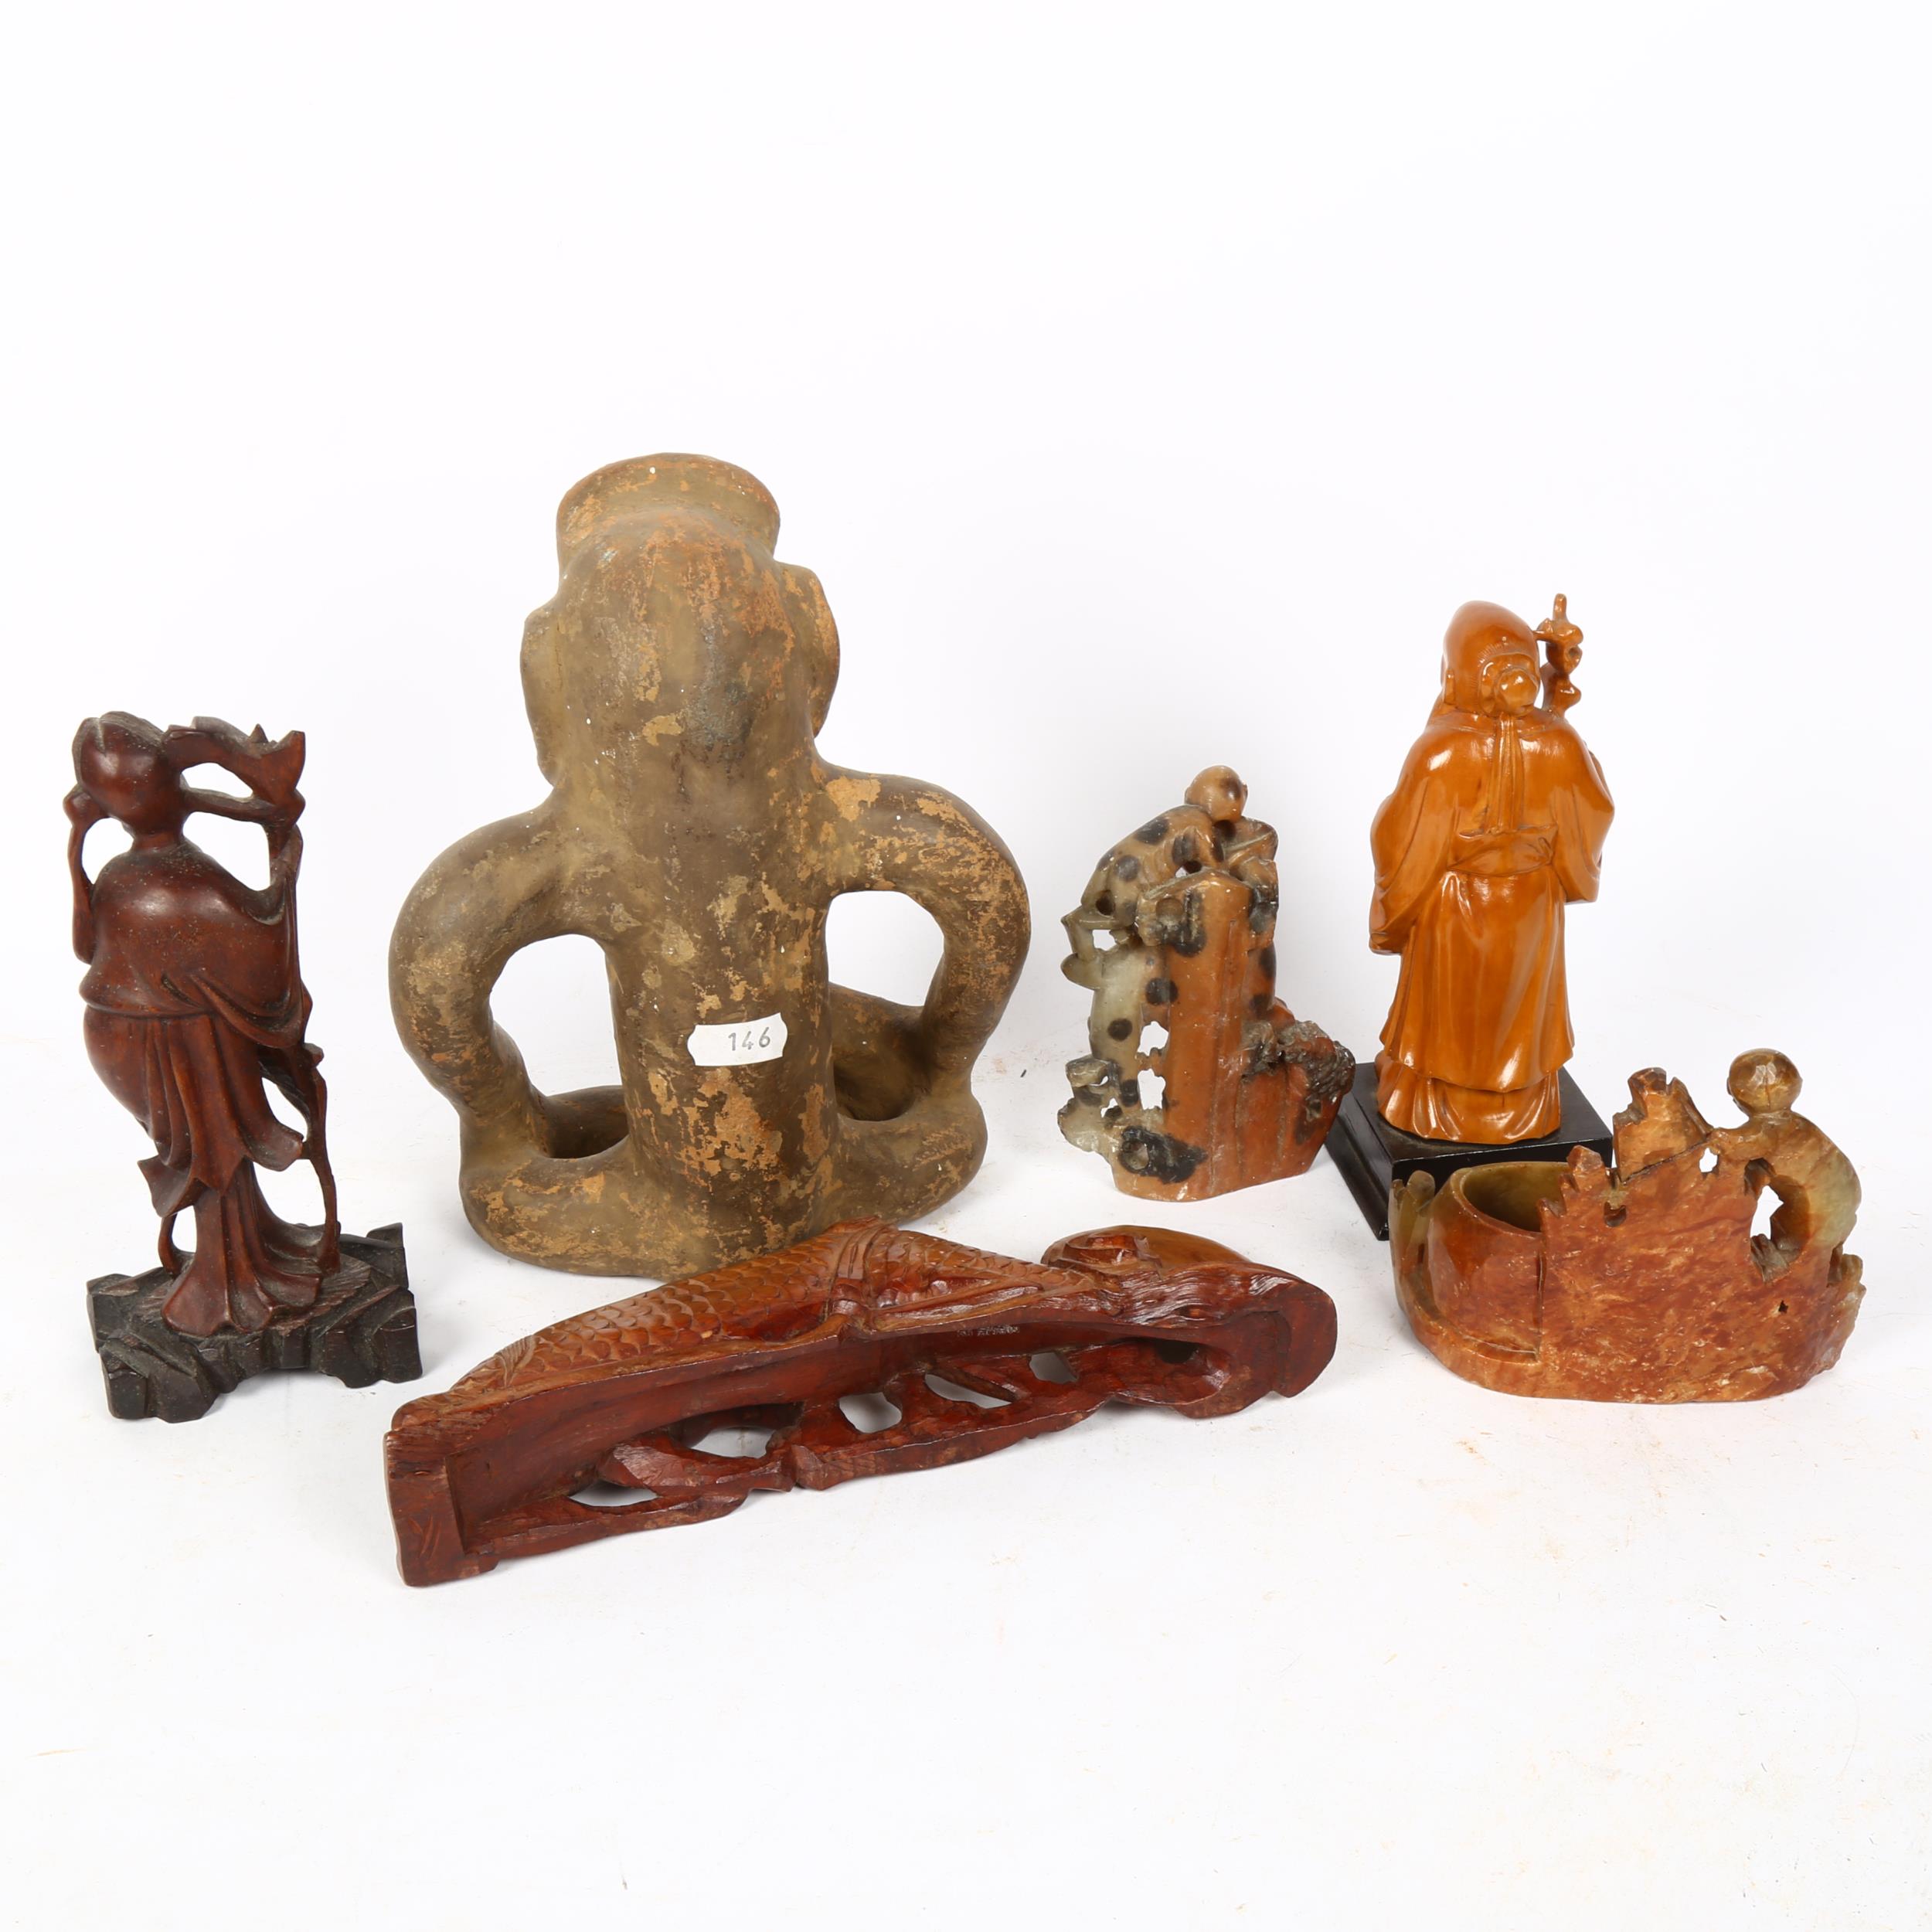 Eastern terracotta figure, Chinese soapstone figures etc - Image 2 of 2